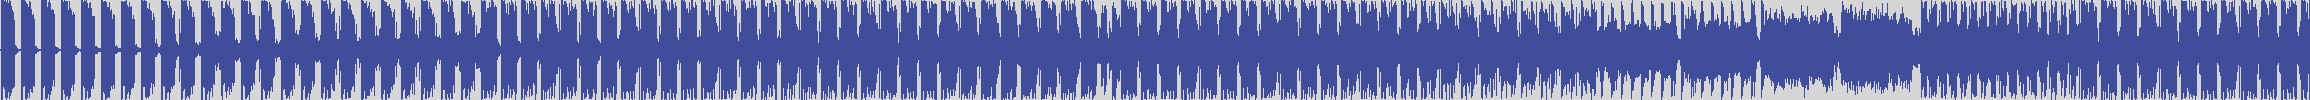 vitti_records [VIT011] Torrens - Form A [Original Mix] audio wave form